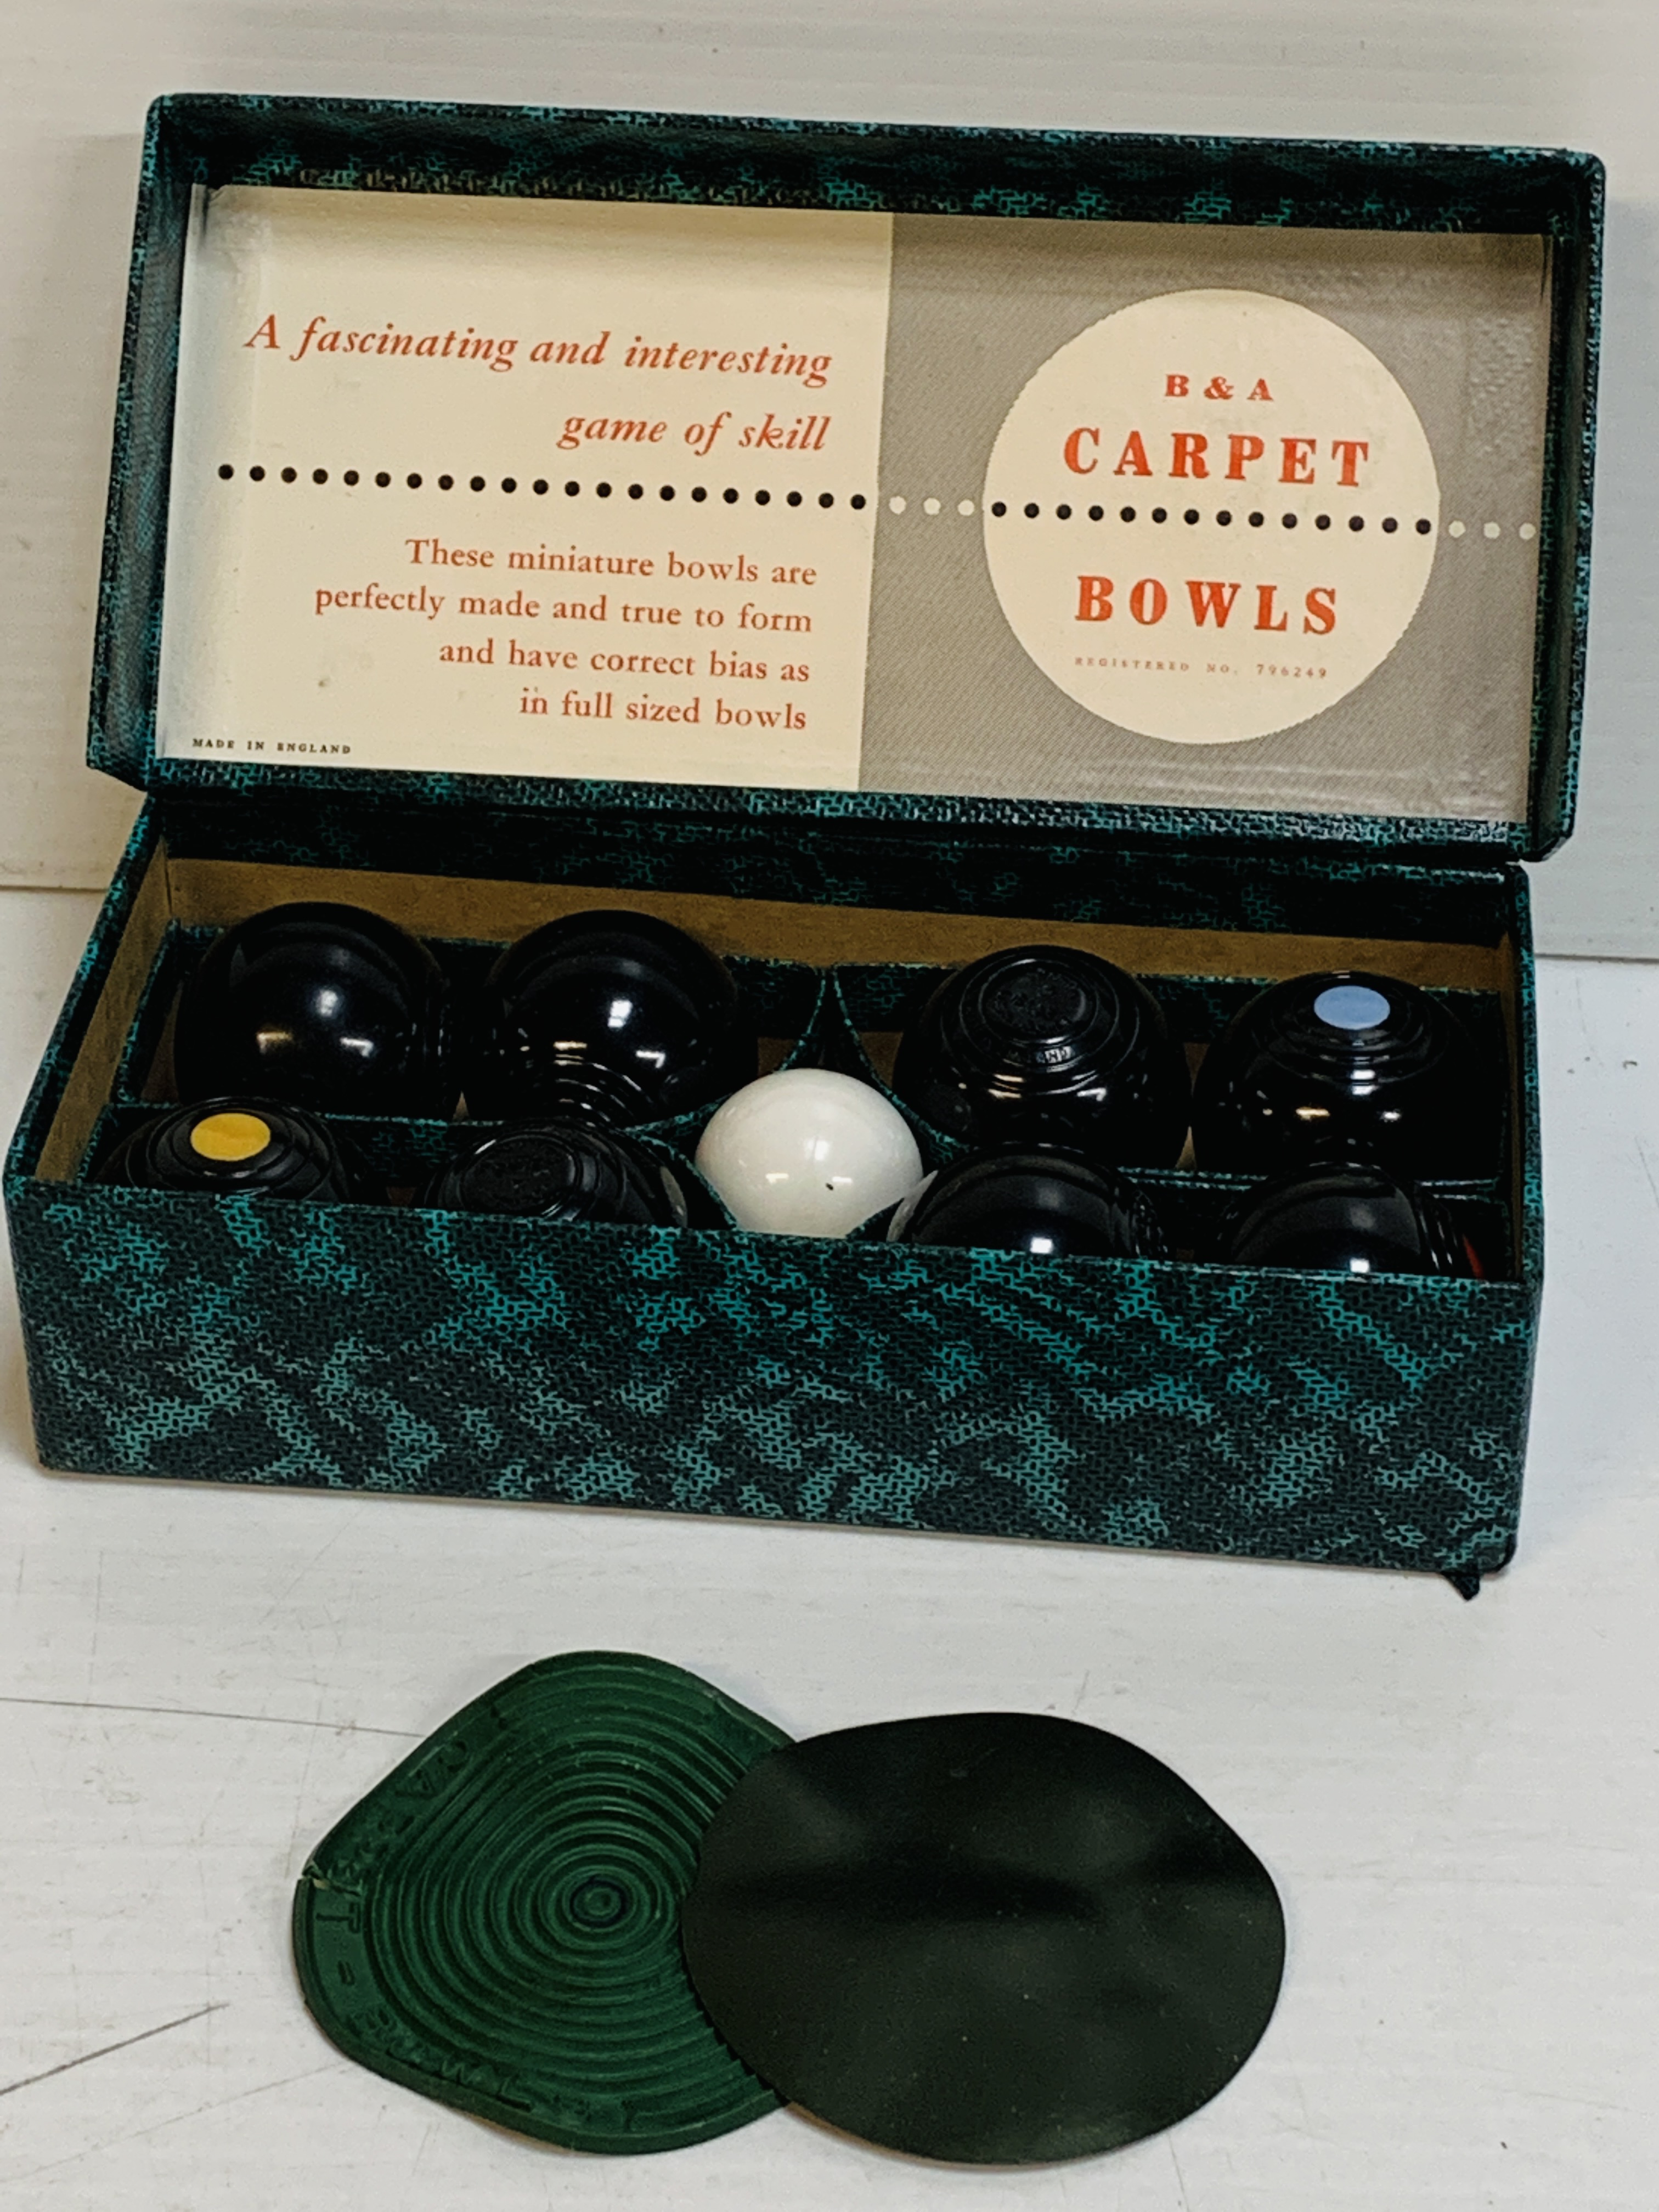 B&A Banda carpet bowls in original box.